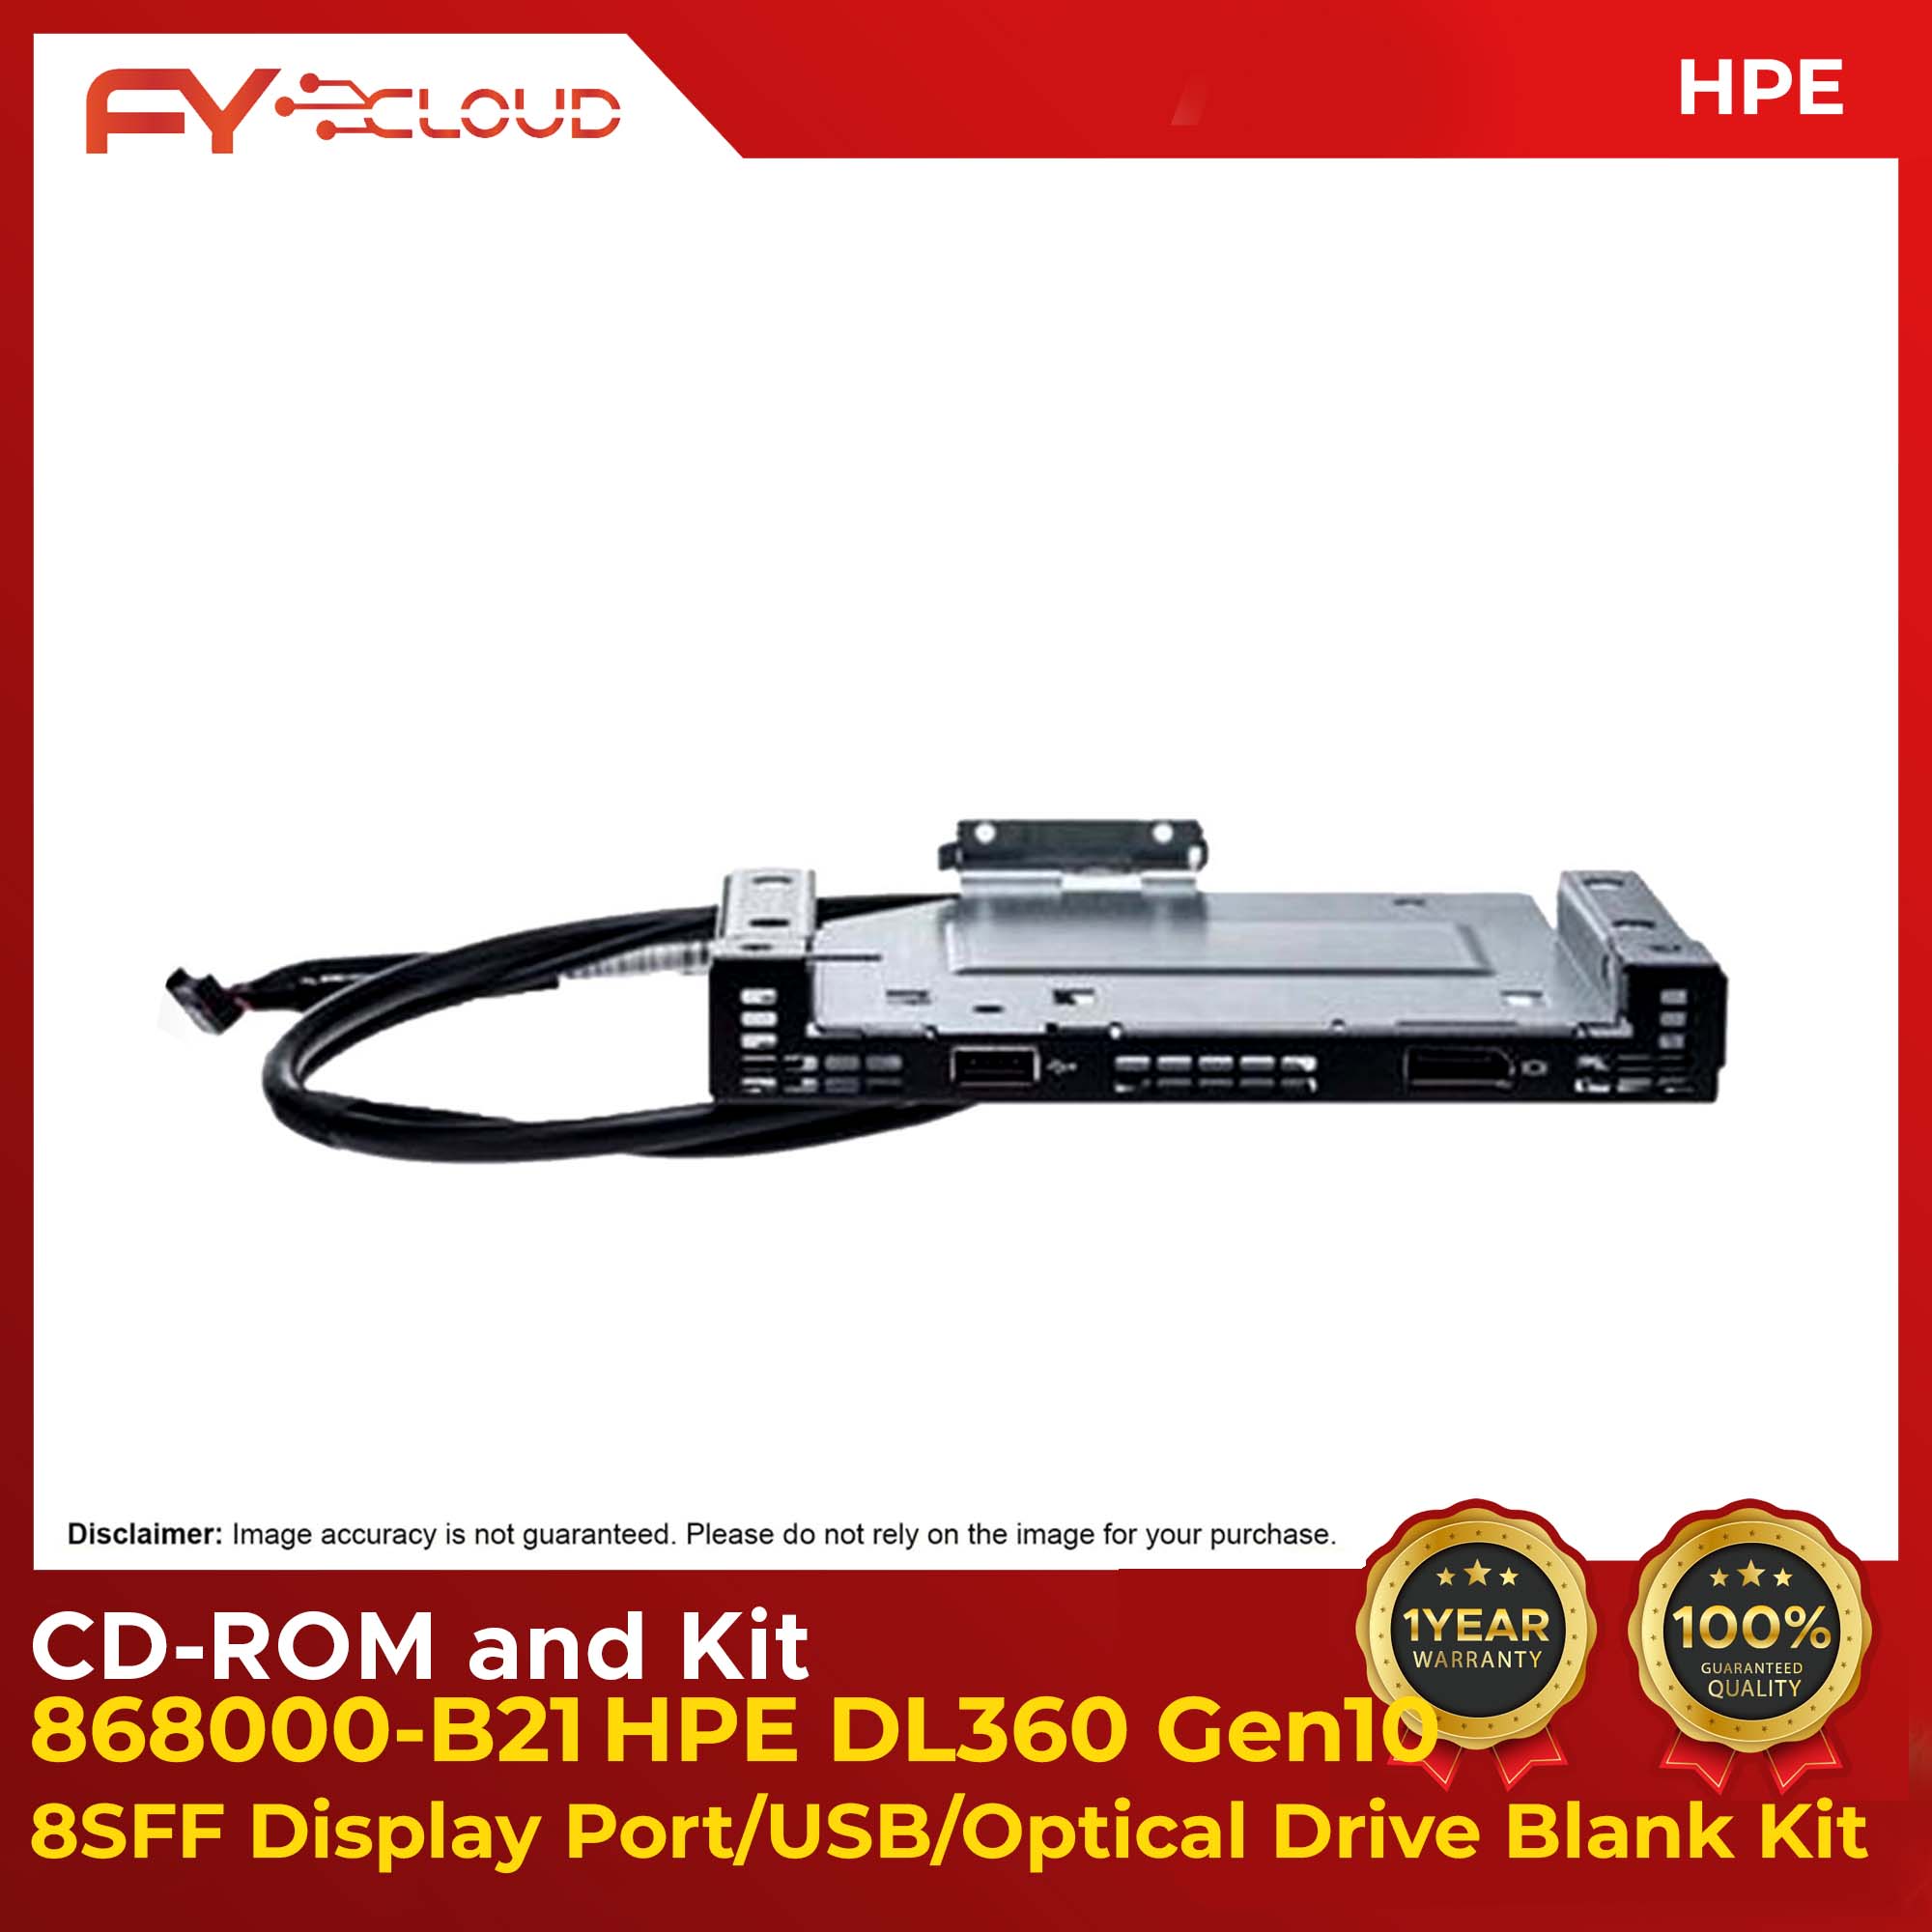 HPE Hewlett Packard Enterprise DL360 Gen10 8SFF Display Port/USB/Optical  Drive Blank Kit - 868000-B21